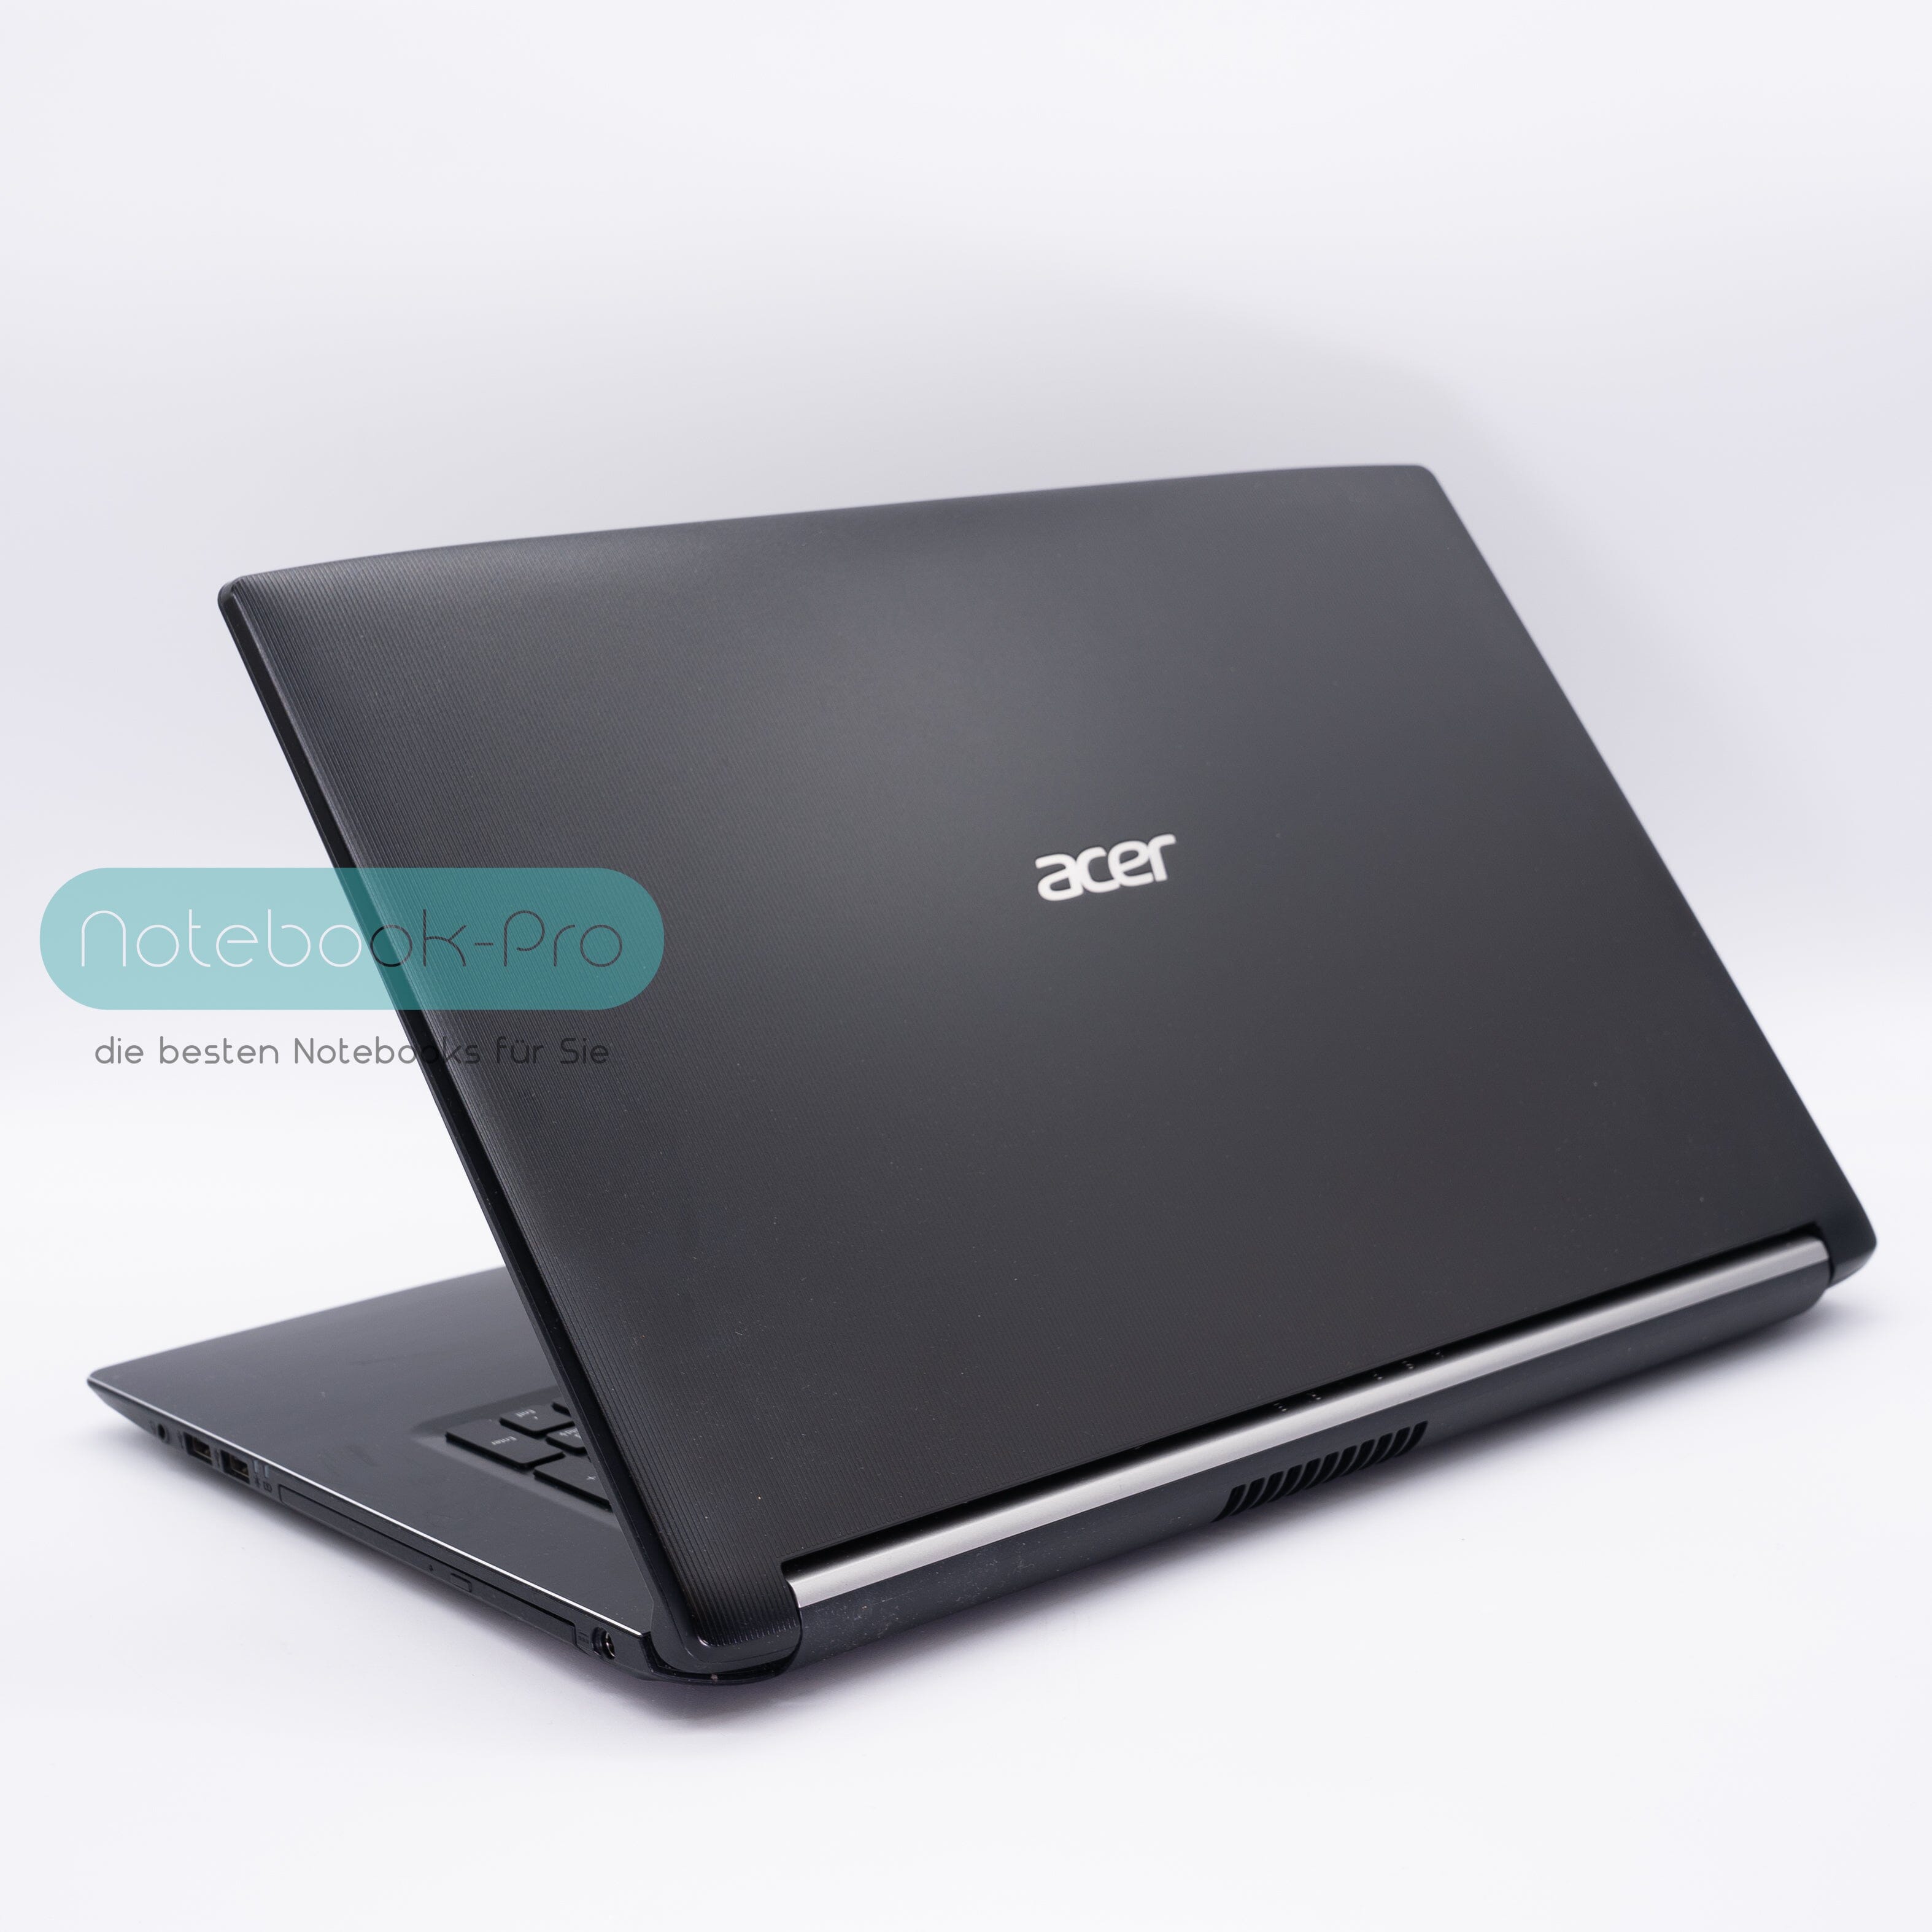 Acer Aspire A517 i7-8550U 20GB DDR4 500GB SSD 17,3 Zoll FHD Laptops Notebook-Pro 